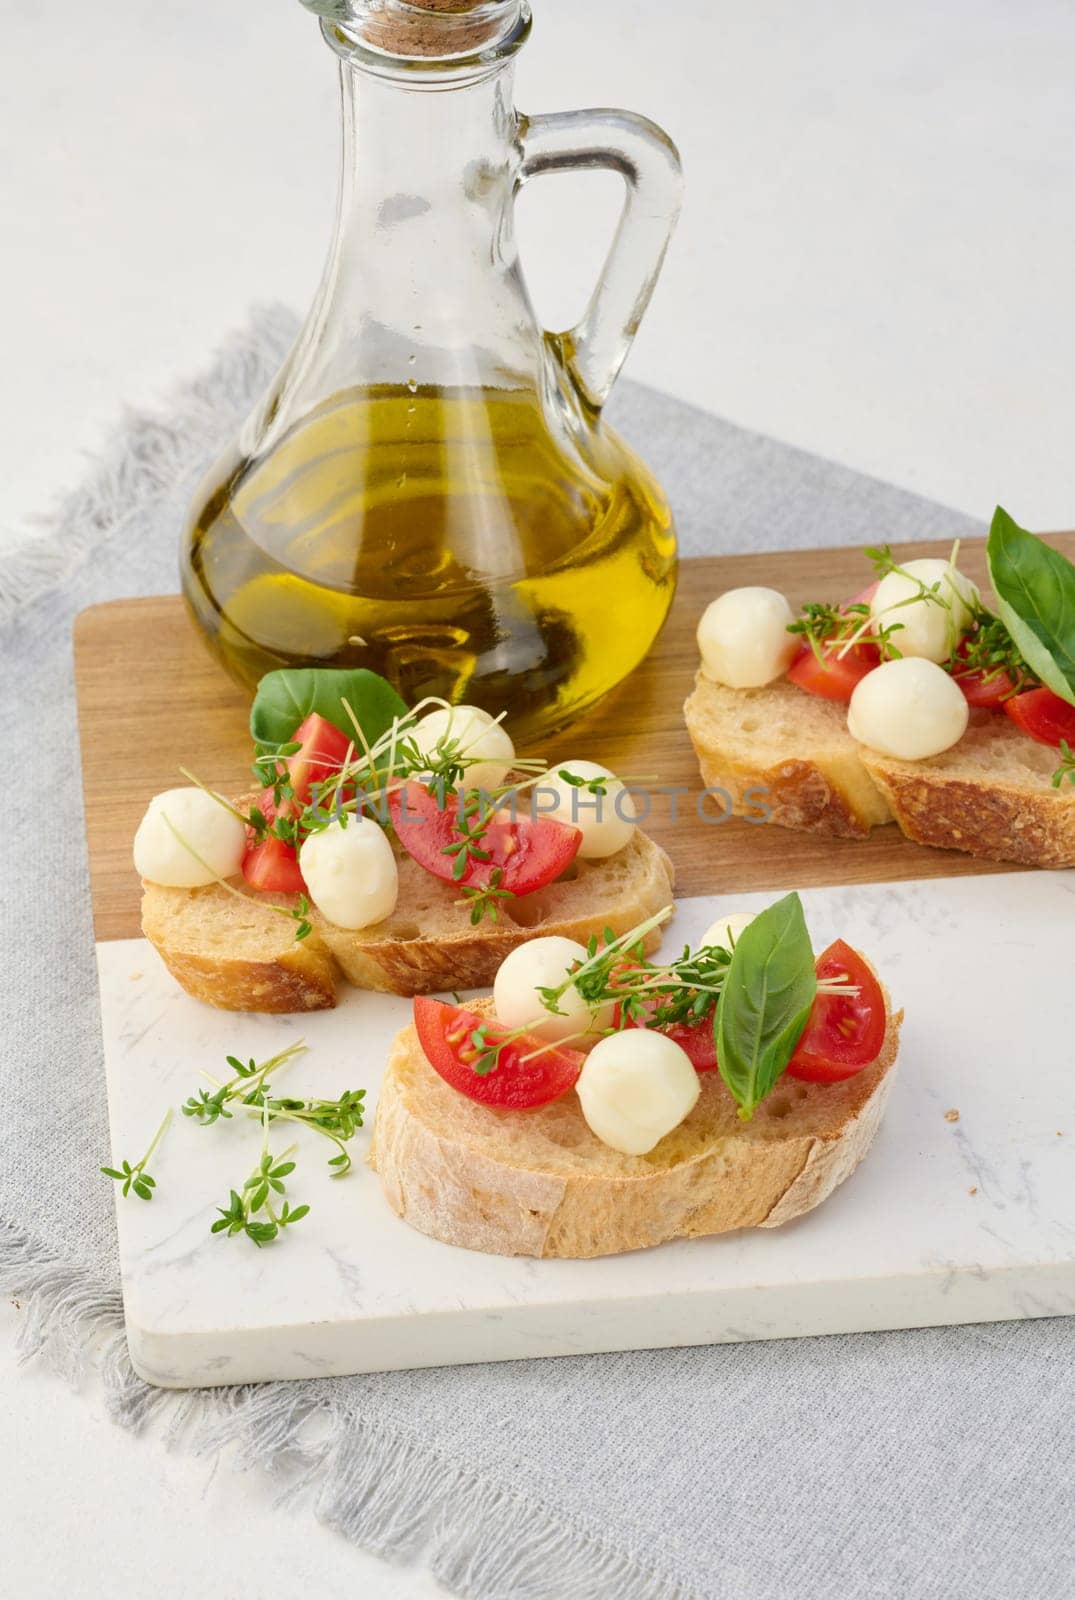 Round mozzarella, cherry tomatoes and microgreens on a piece of white bread by ndanko